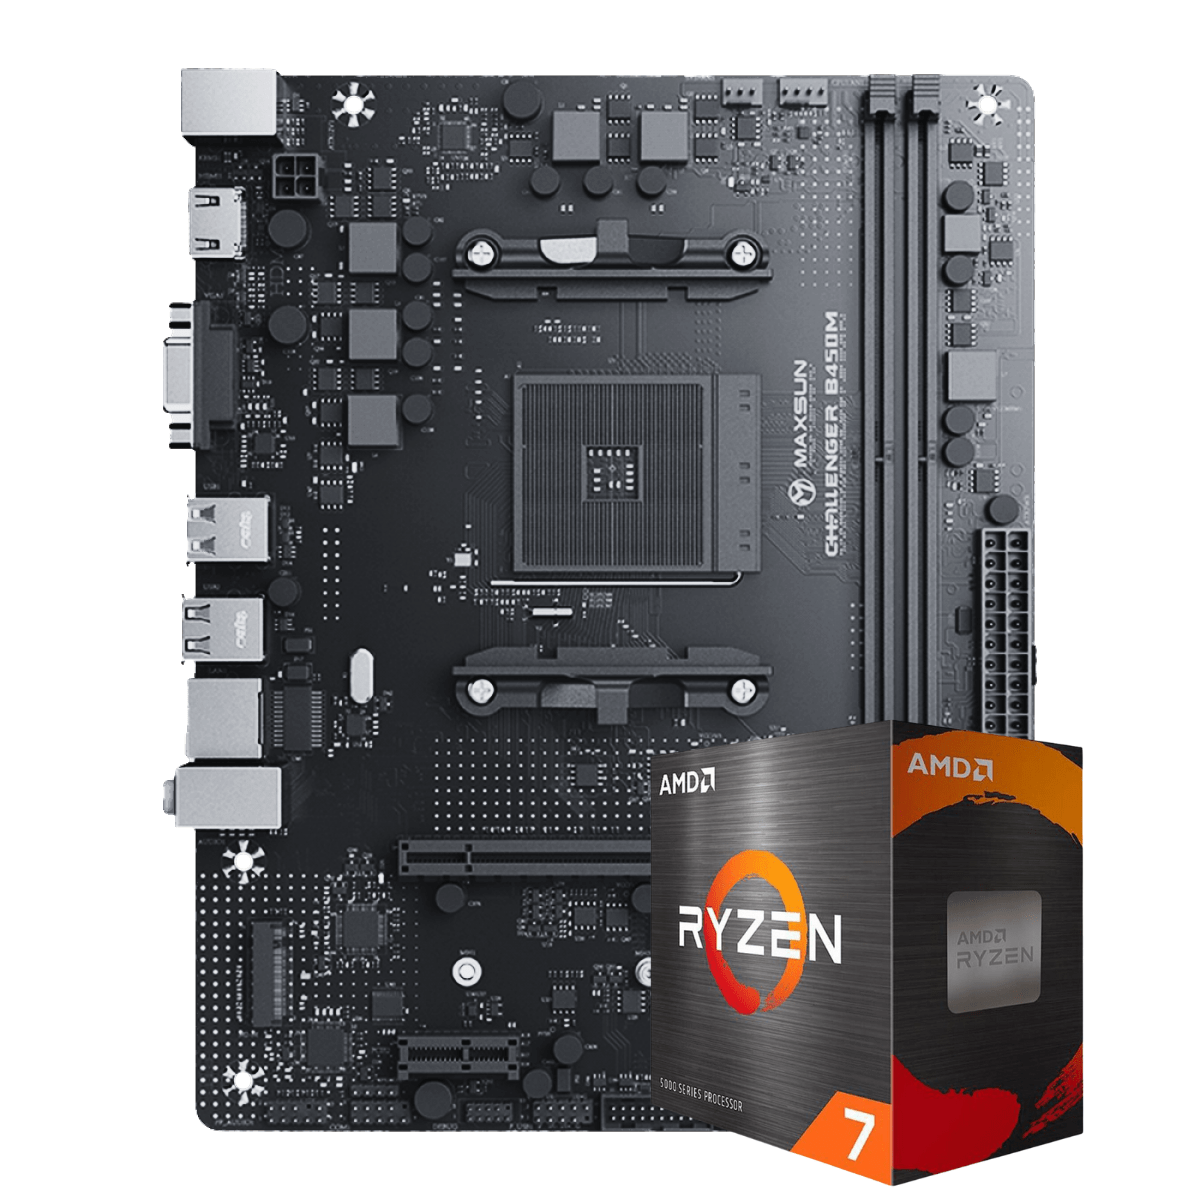 Kit Upgrade, AMD Ryzen 7 5700G, Placa Mãe MAXSUN B450M MS-Challenger